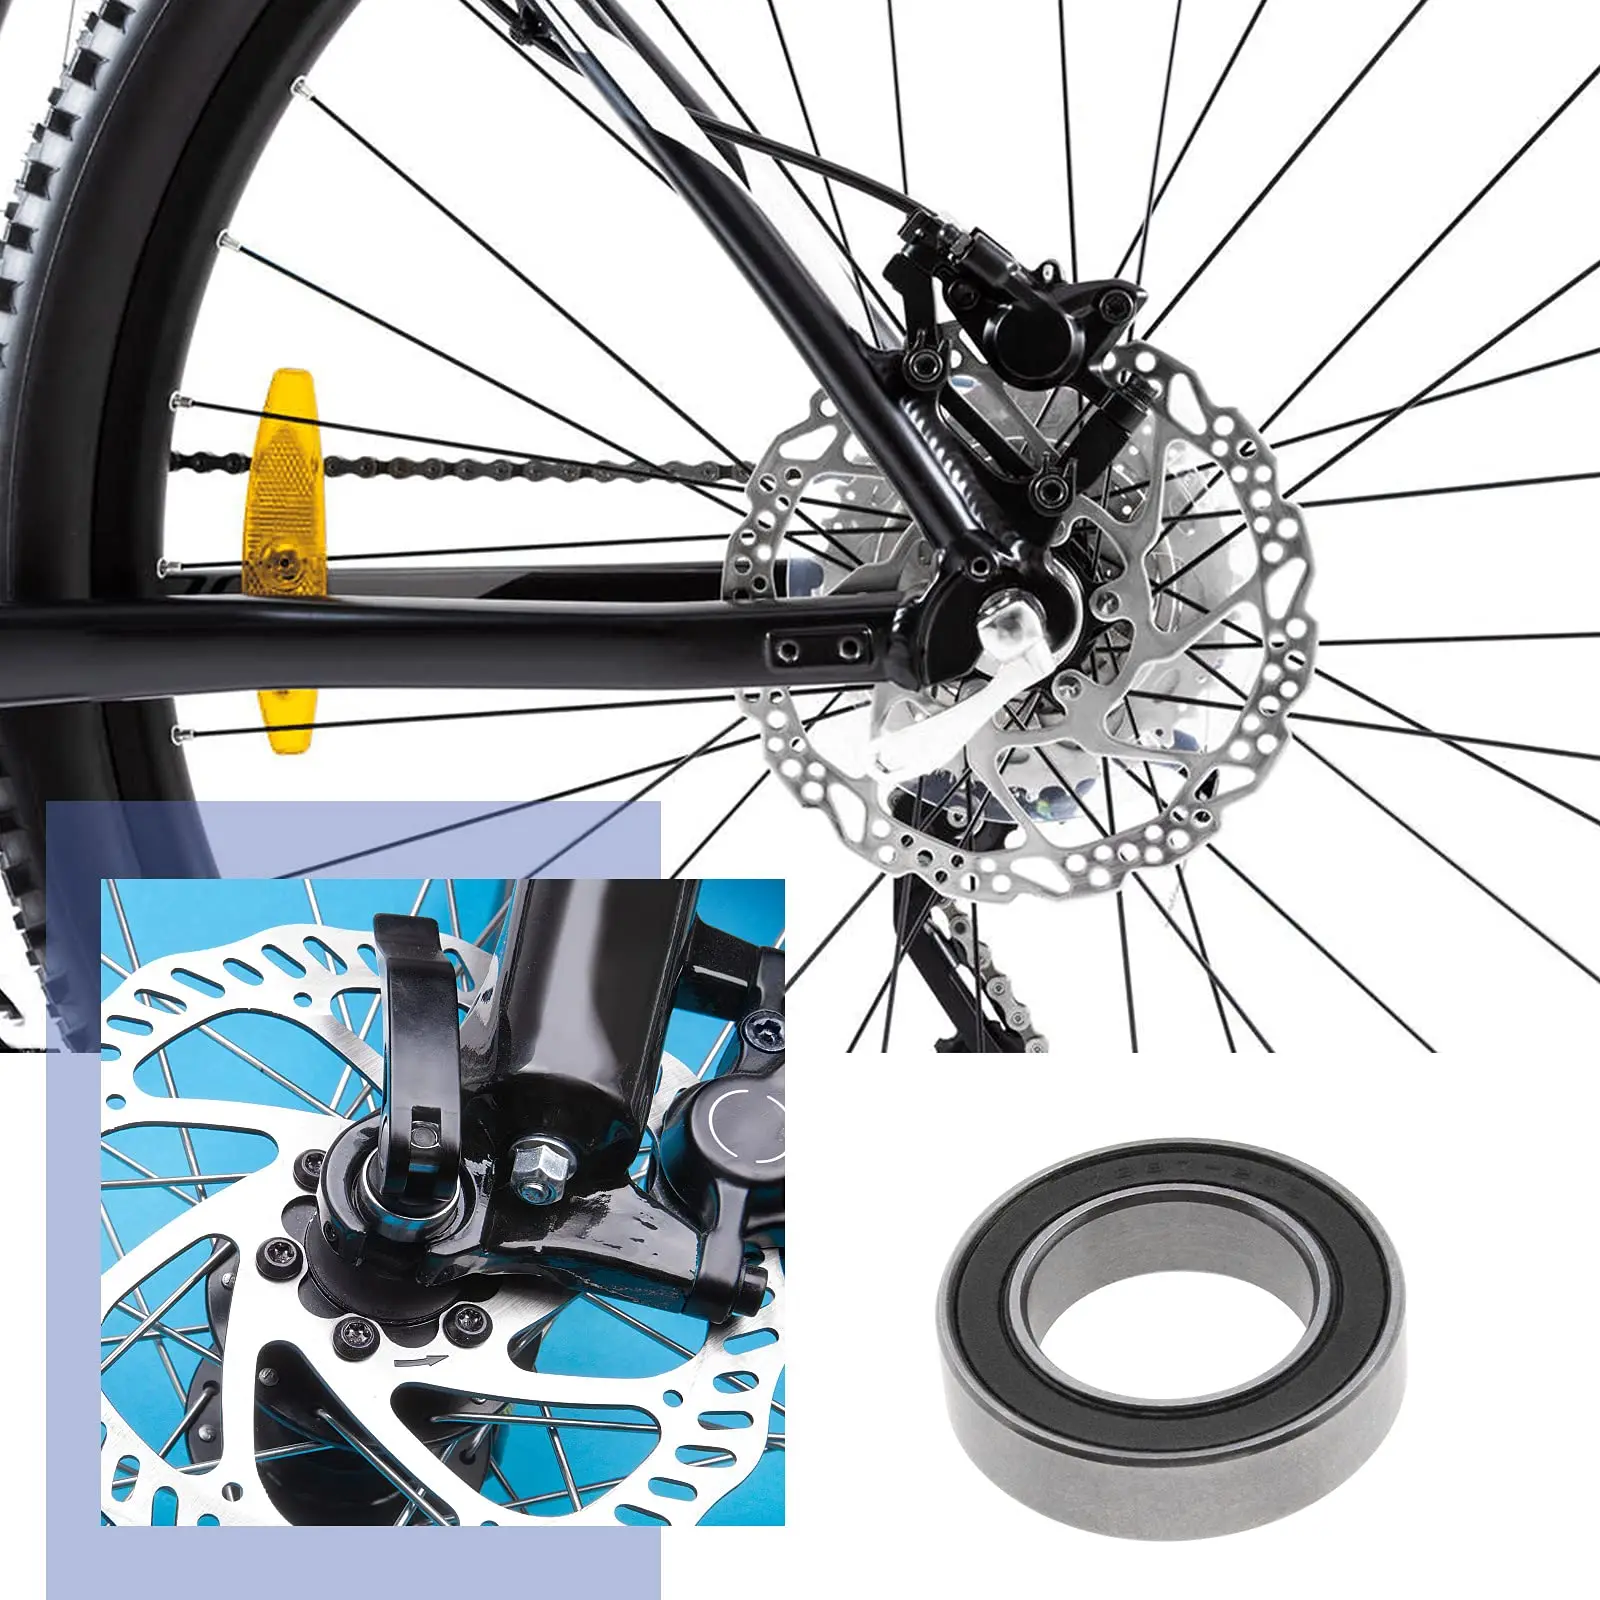 10pcs/lot 17287-2RS MR17287 17287 17287RS GCR15 61902/17 Ball Bearing 17x28x7mm for Bike Wheels Bottom Bracket Repair Bearings